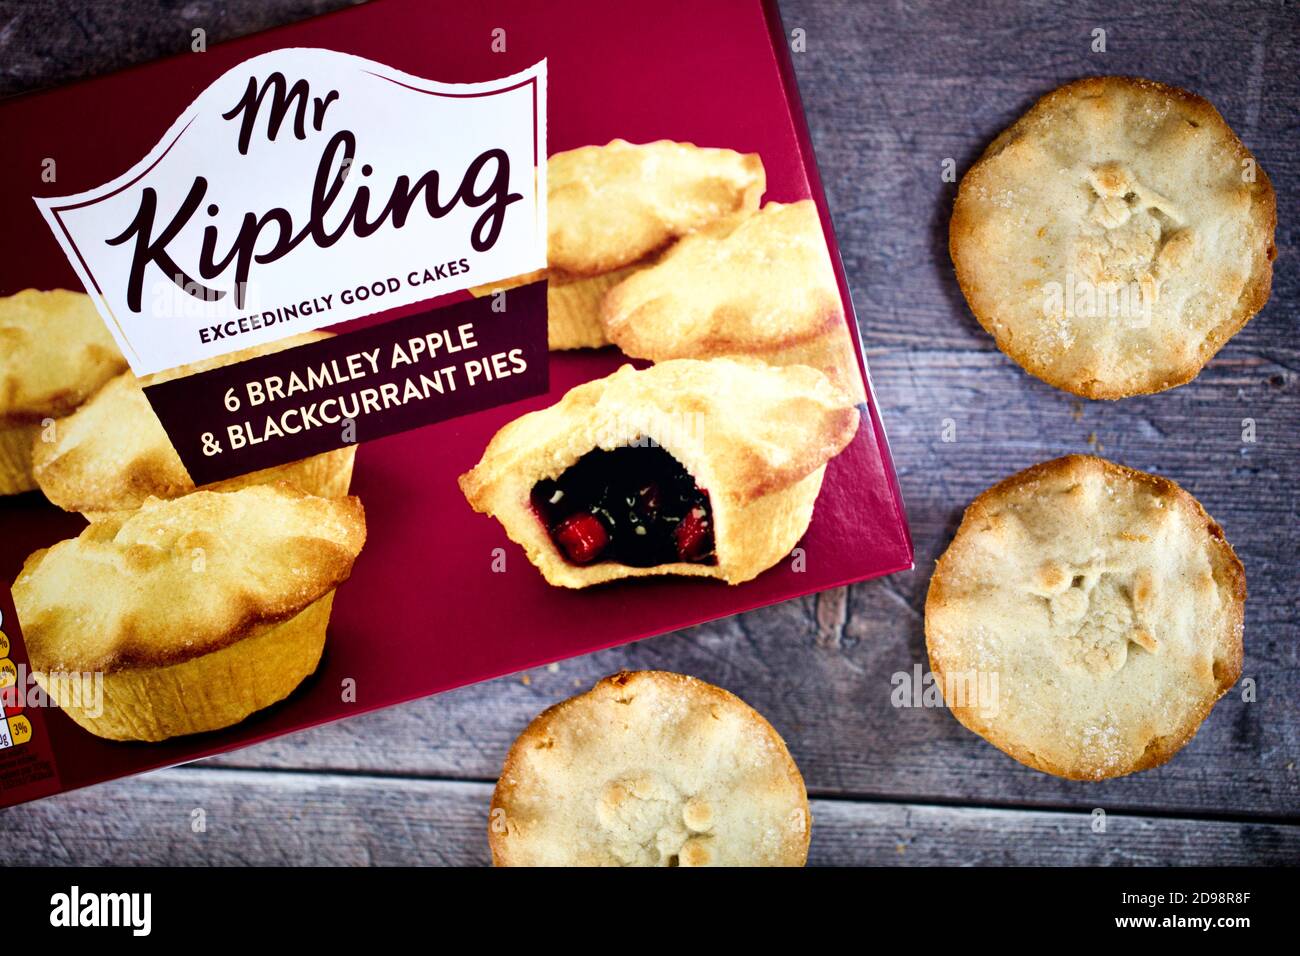 Mr Kipling Apple & Blackcurrant Pies Stock Photo - Alamy